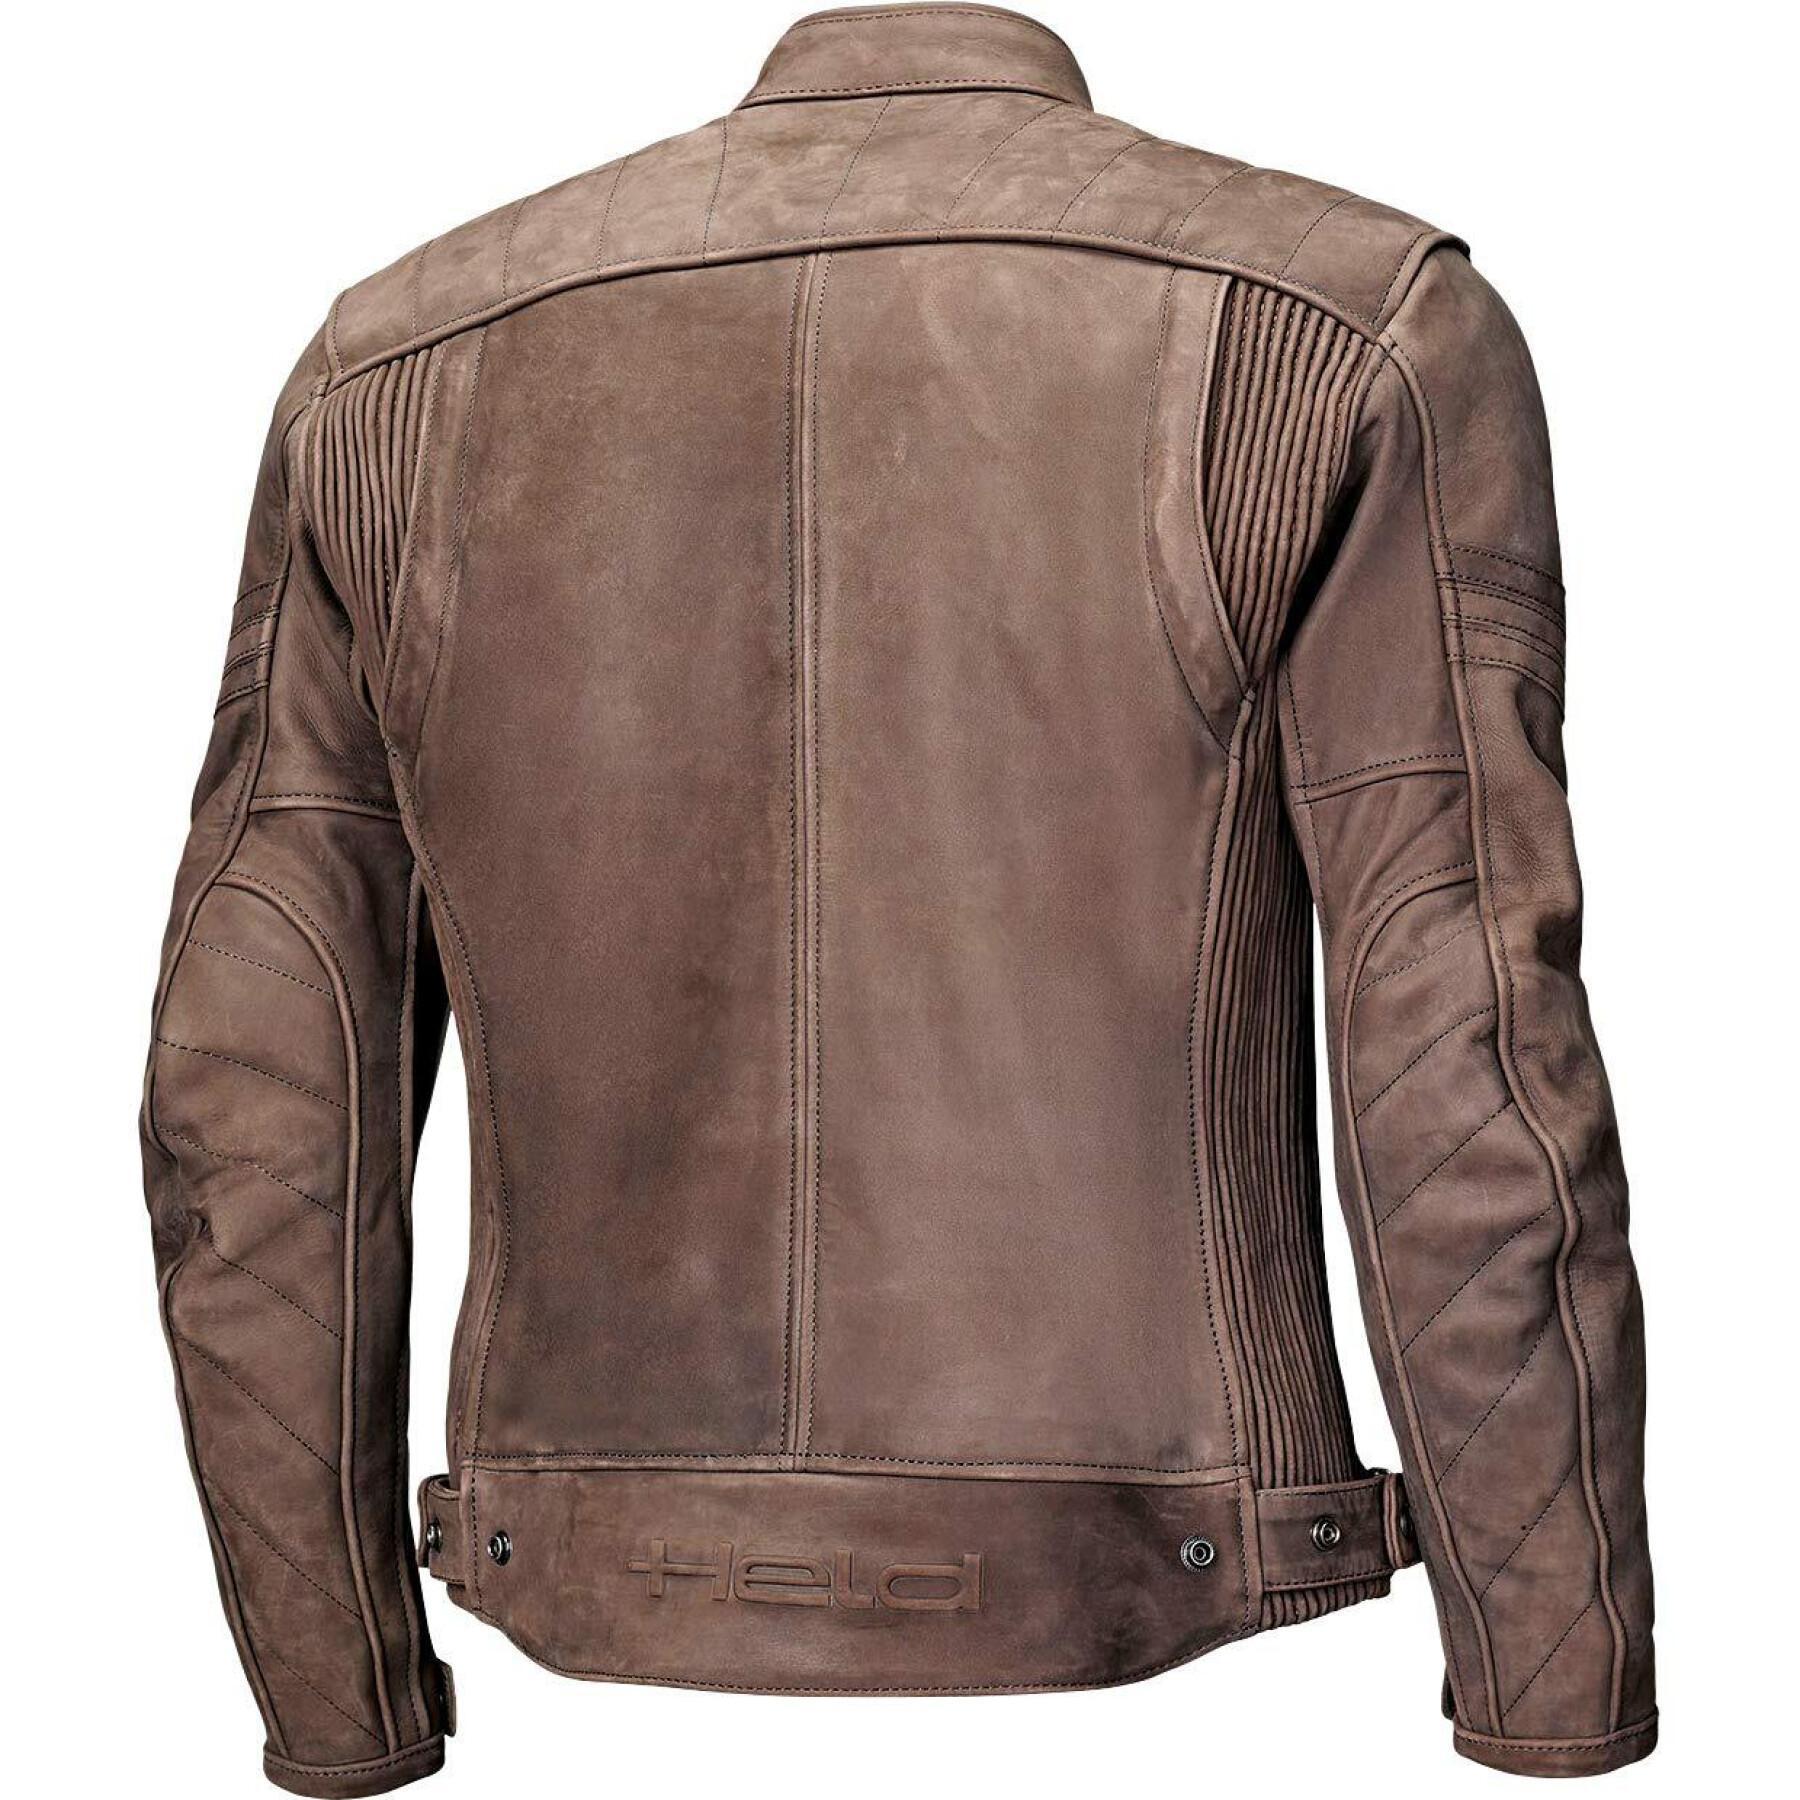 Leather jacket Held hot rock